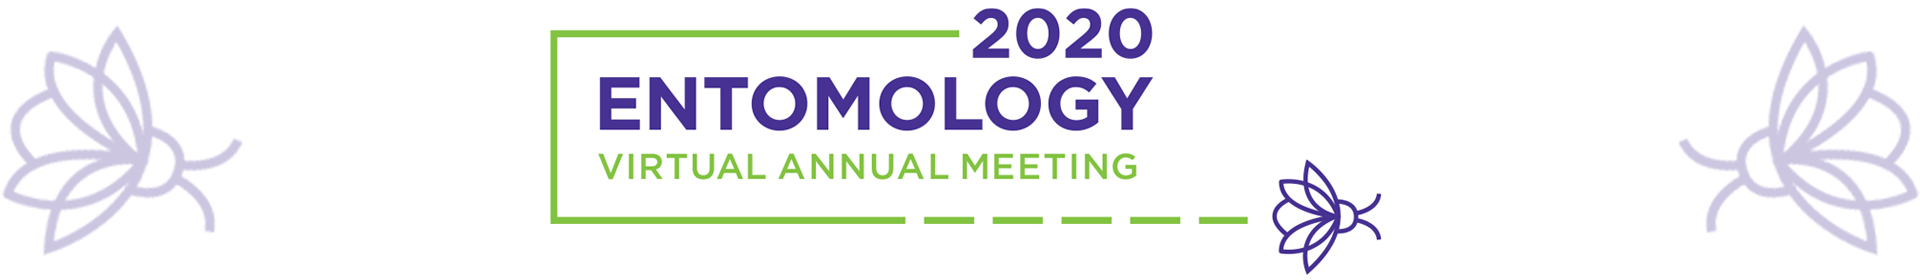 Entomology 2020 Event Banner